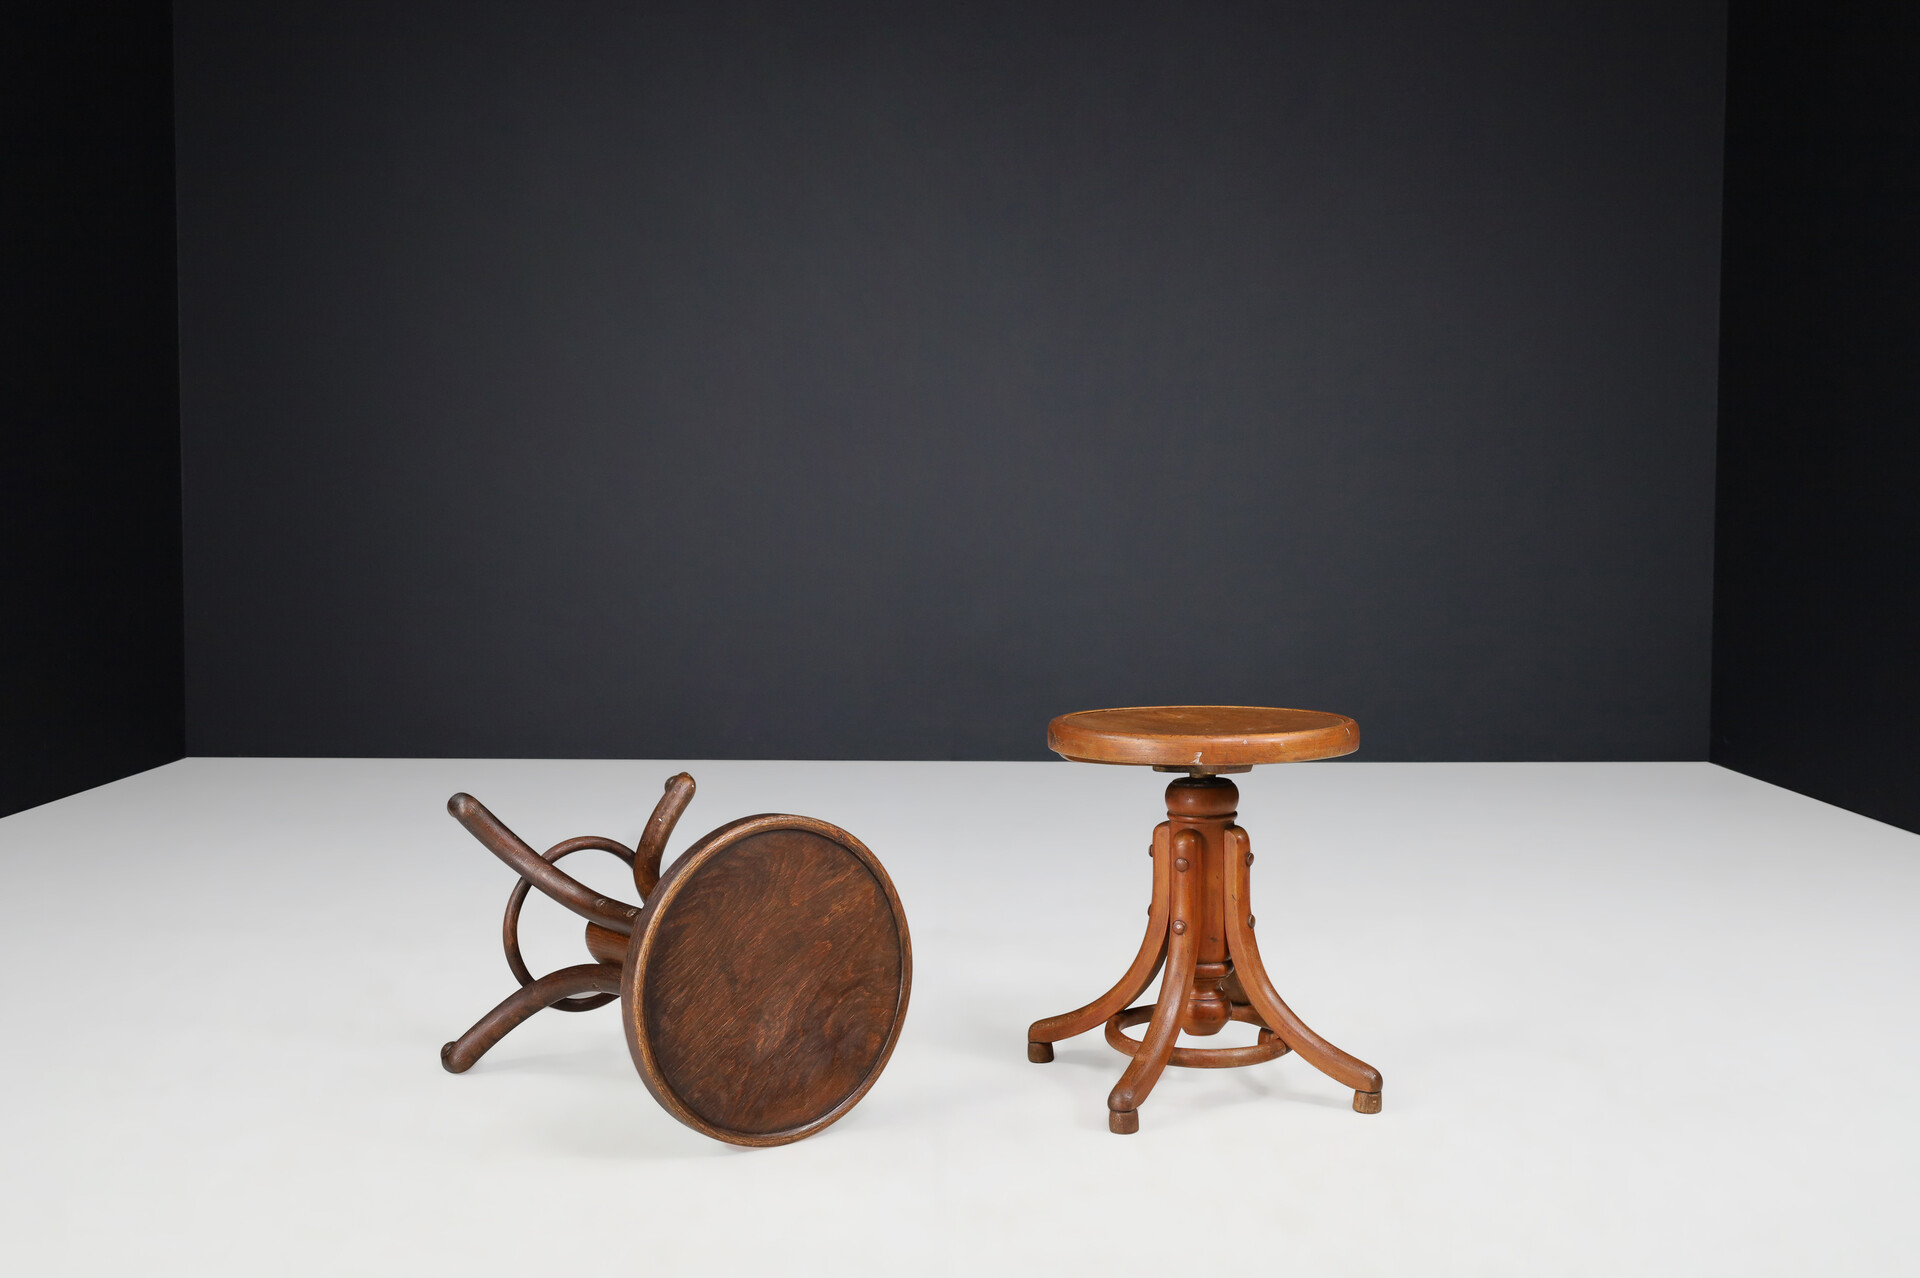 Antique Adjustable tabouret stools by Thonet, Austria 1910 20th century